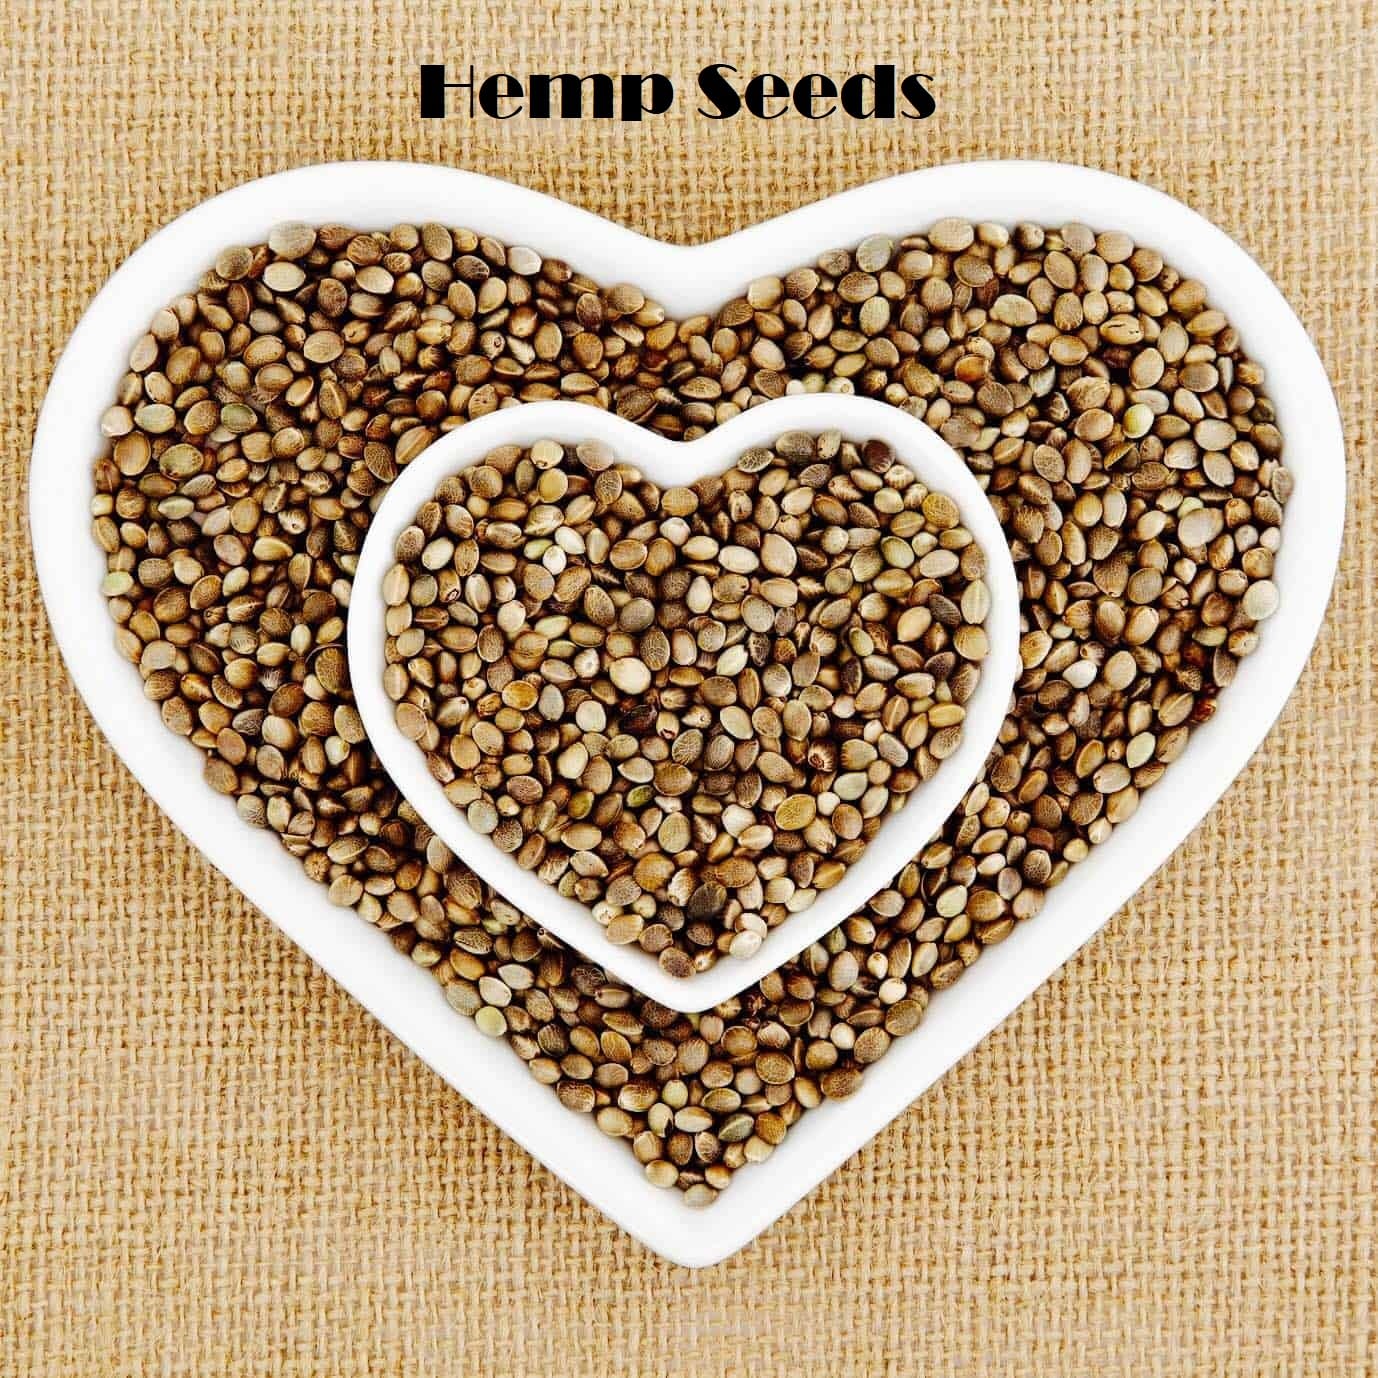 Hemp seeds